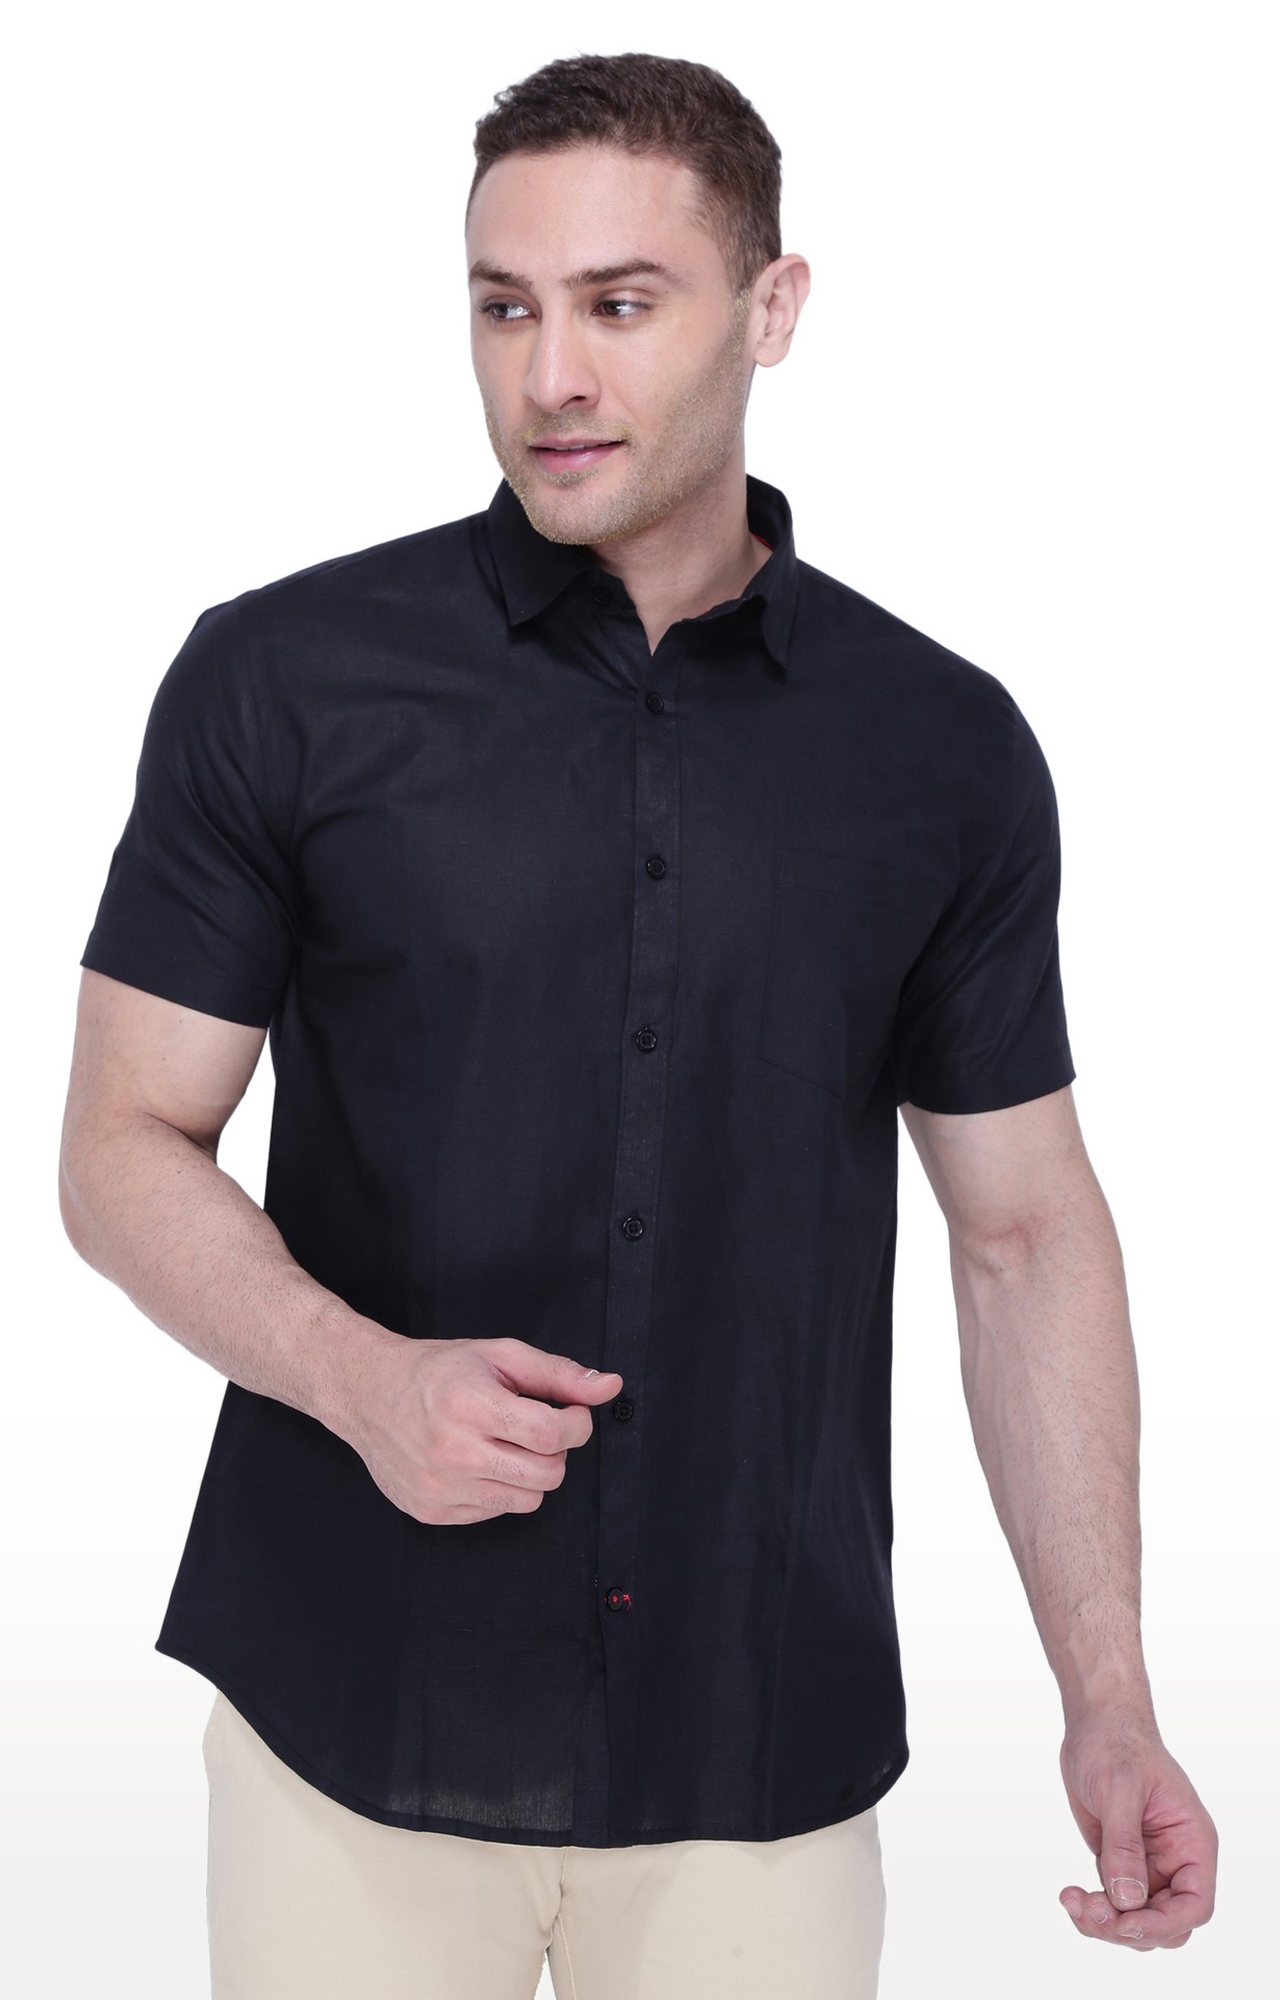 Southbay | Southbay Men's Black Half Sleeve Linen Cotton Formal Shirt